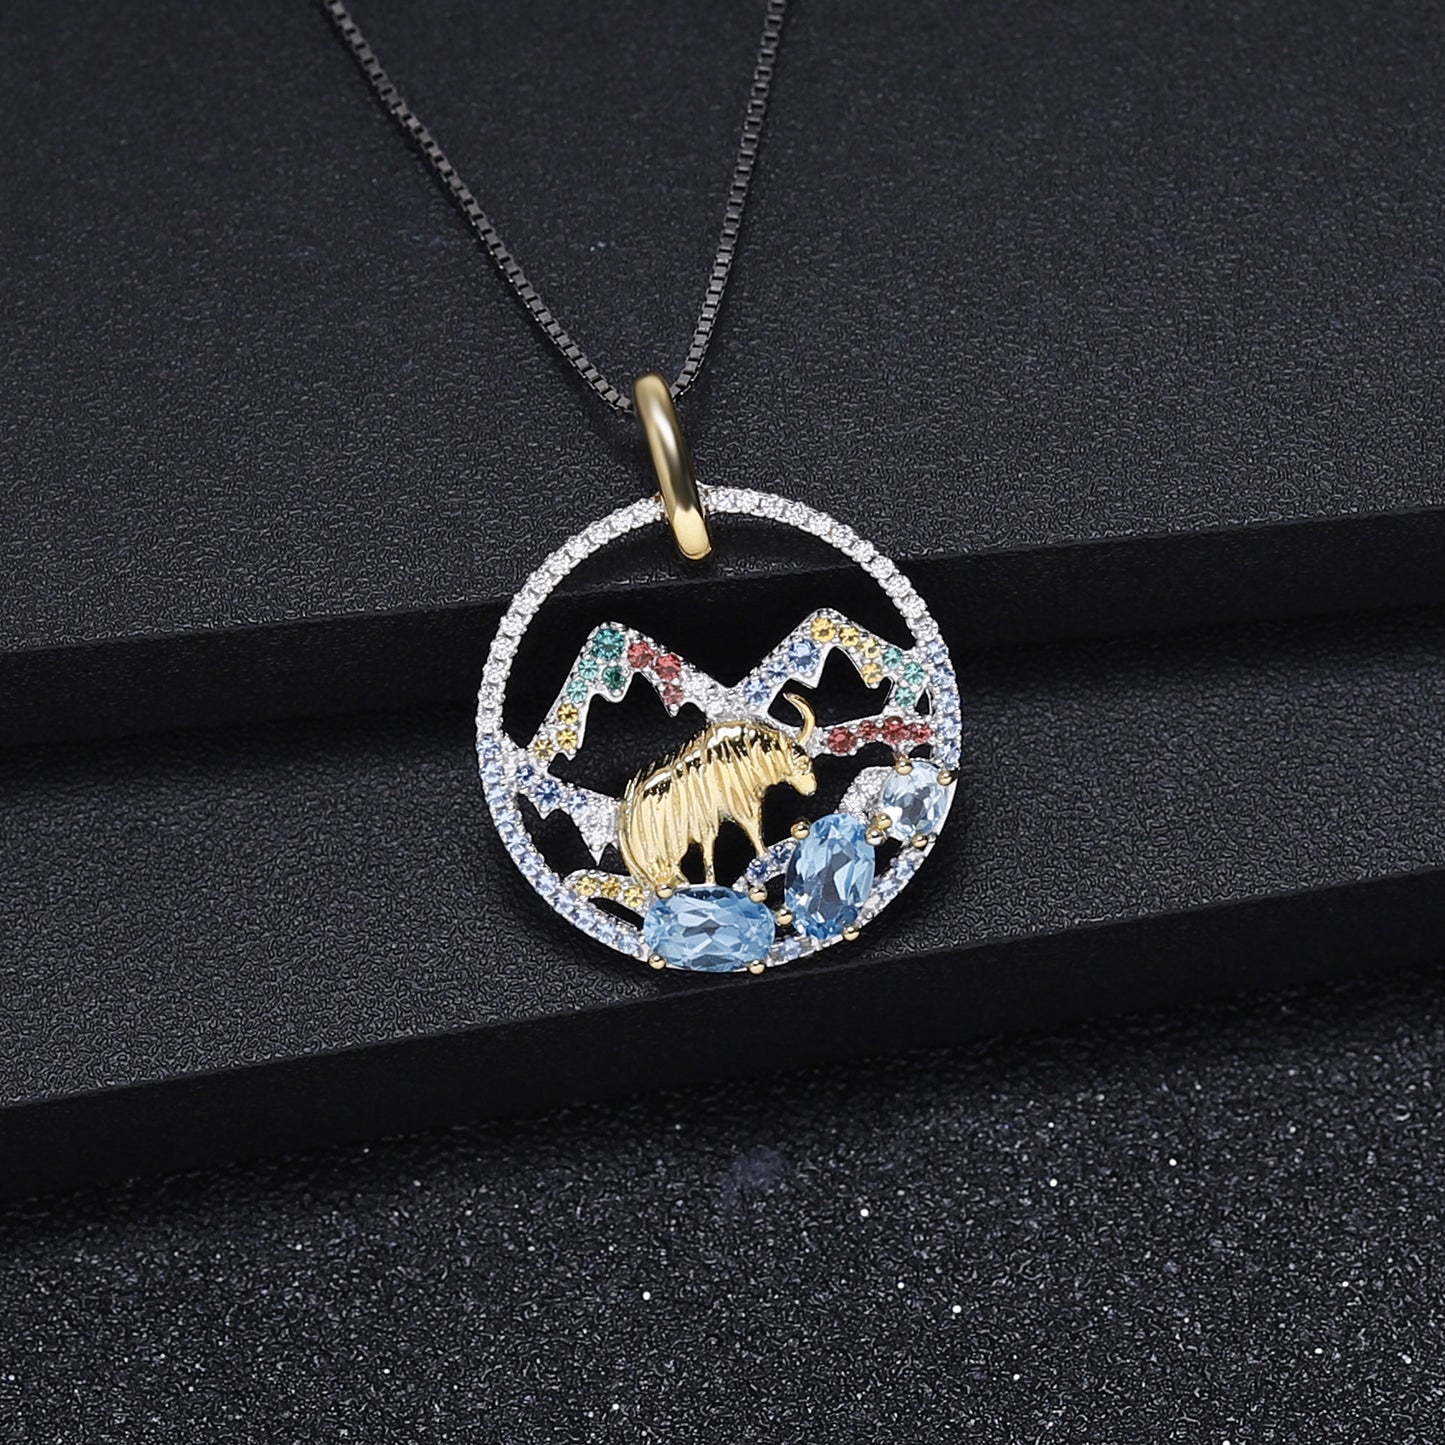 Premium Sense Animal Element Design Natural Style Garnet  Pendant Silver Necklace for Women